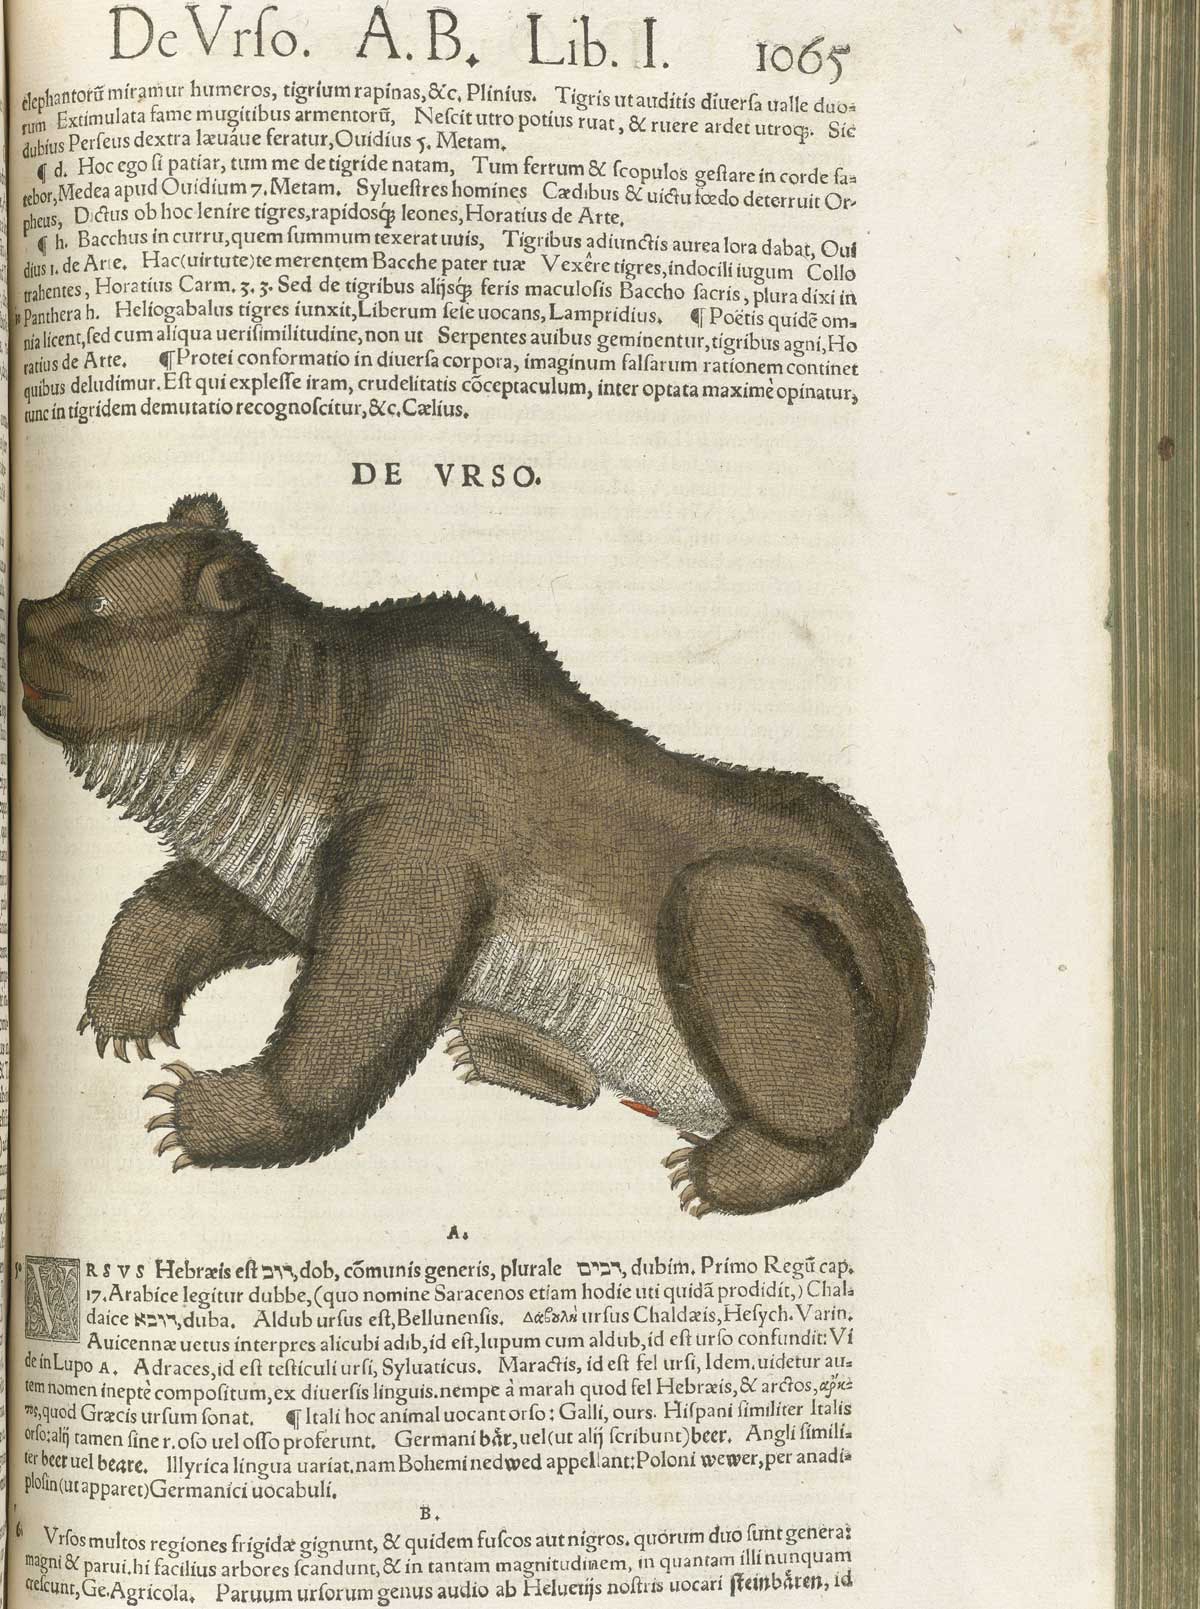 Page 1065 from volume 1 of Conrad Gessner's Conradi Gesneri medici Tigurini Historiae animalium, featuring the colored woodcut of de urso or a brown bear.